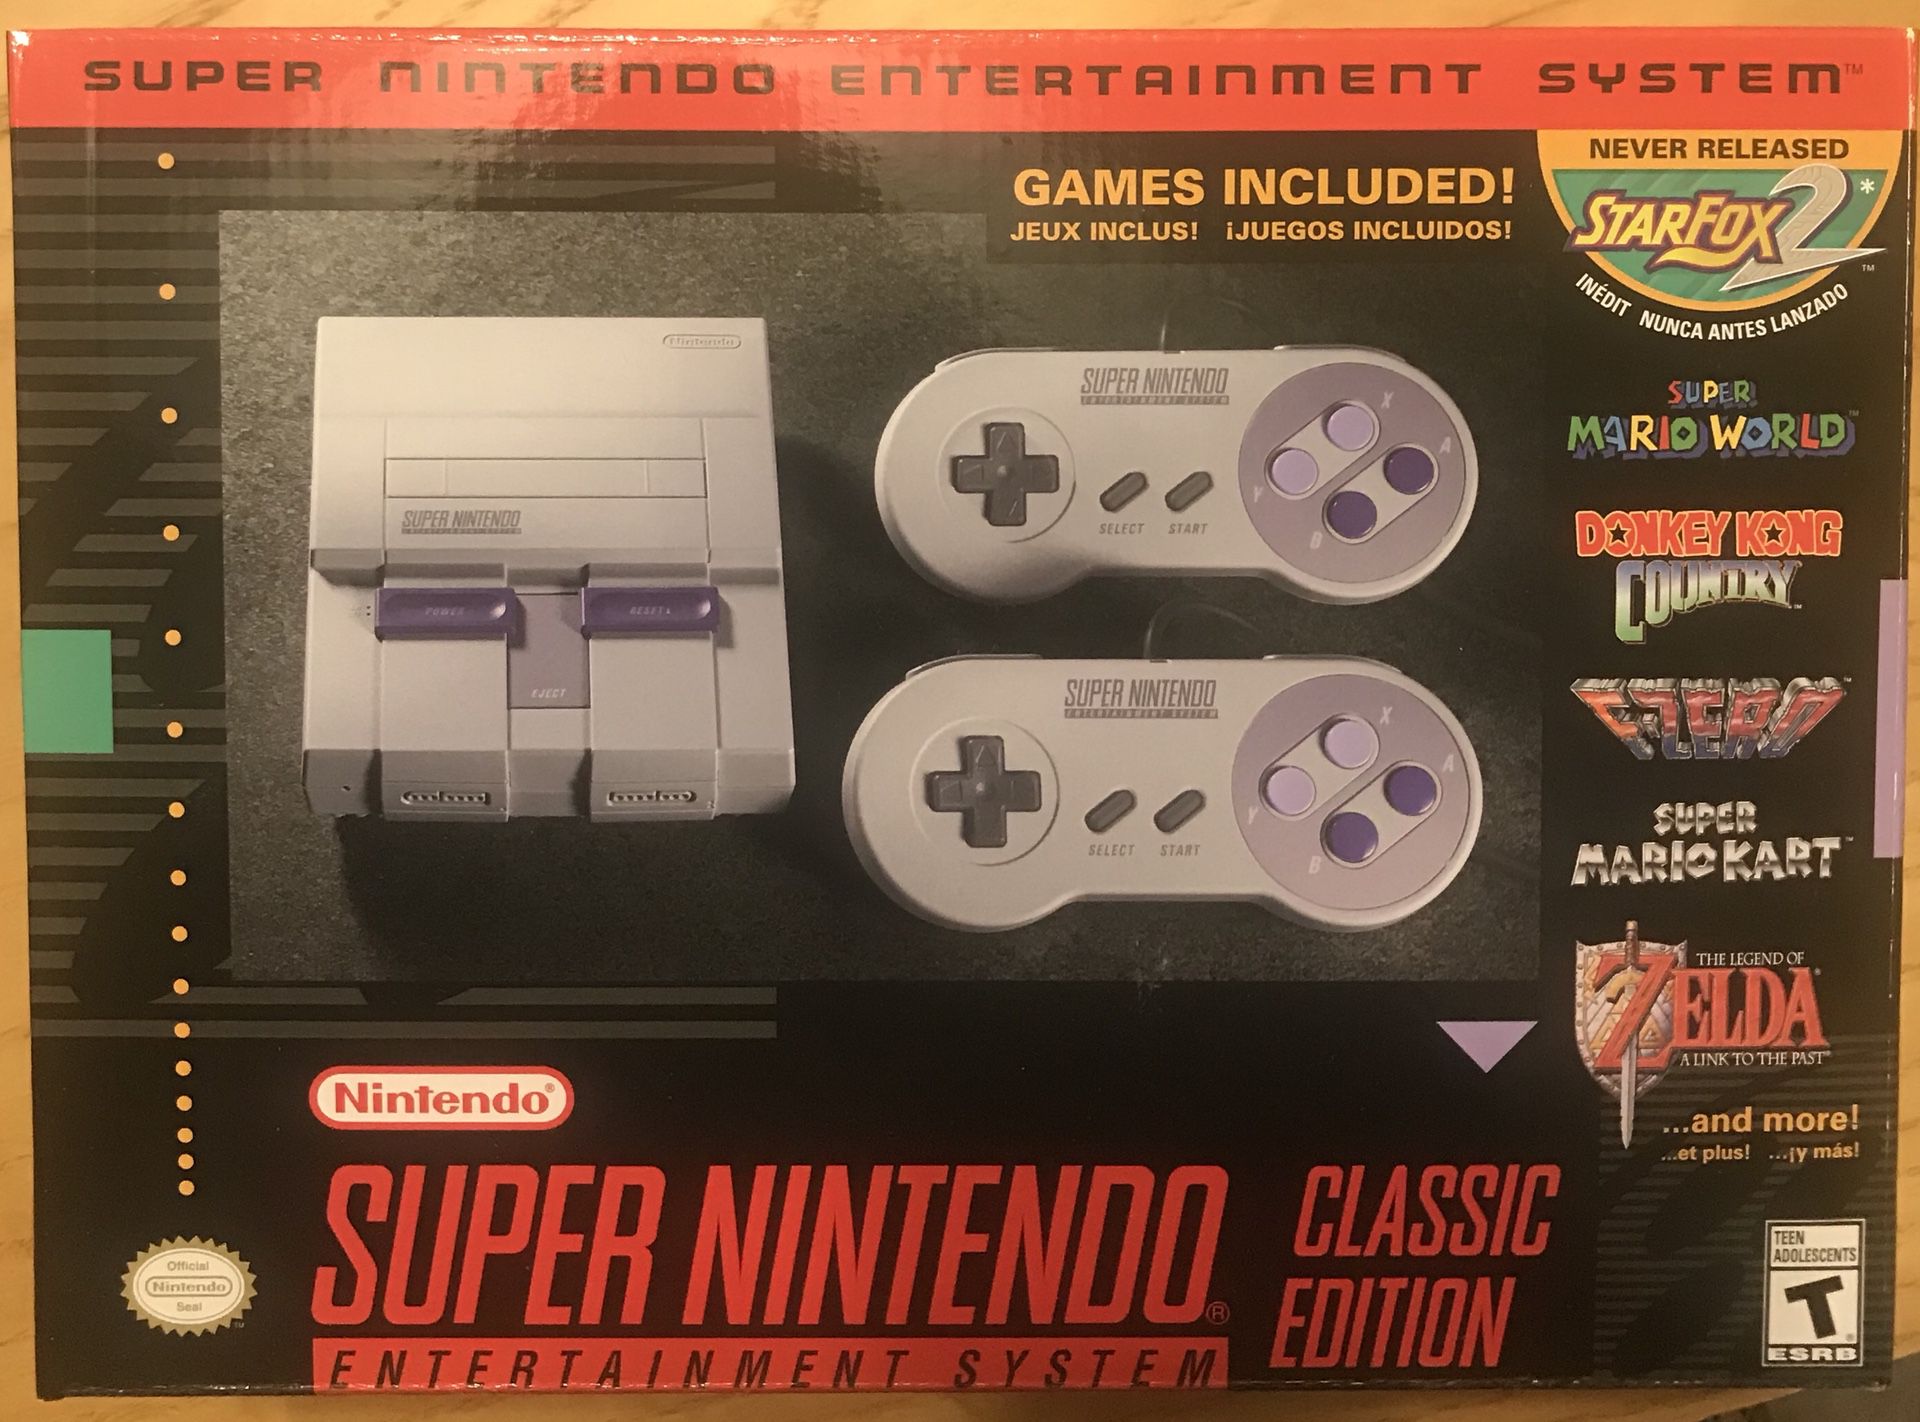 Super NEW Nintendo Entertainment System-Classic Edition